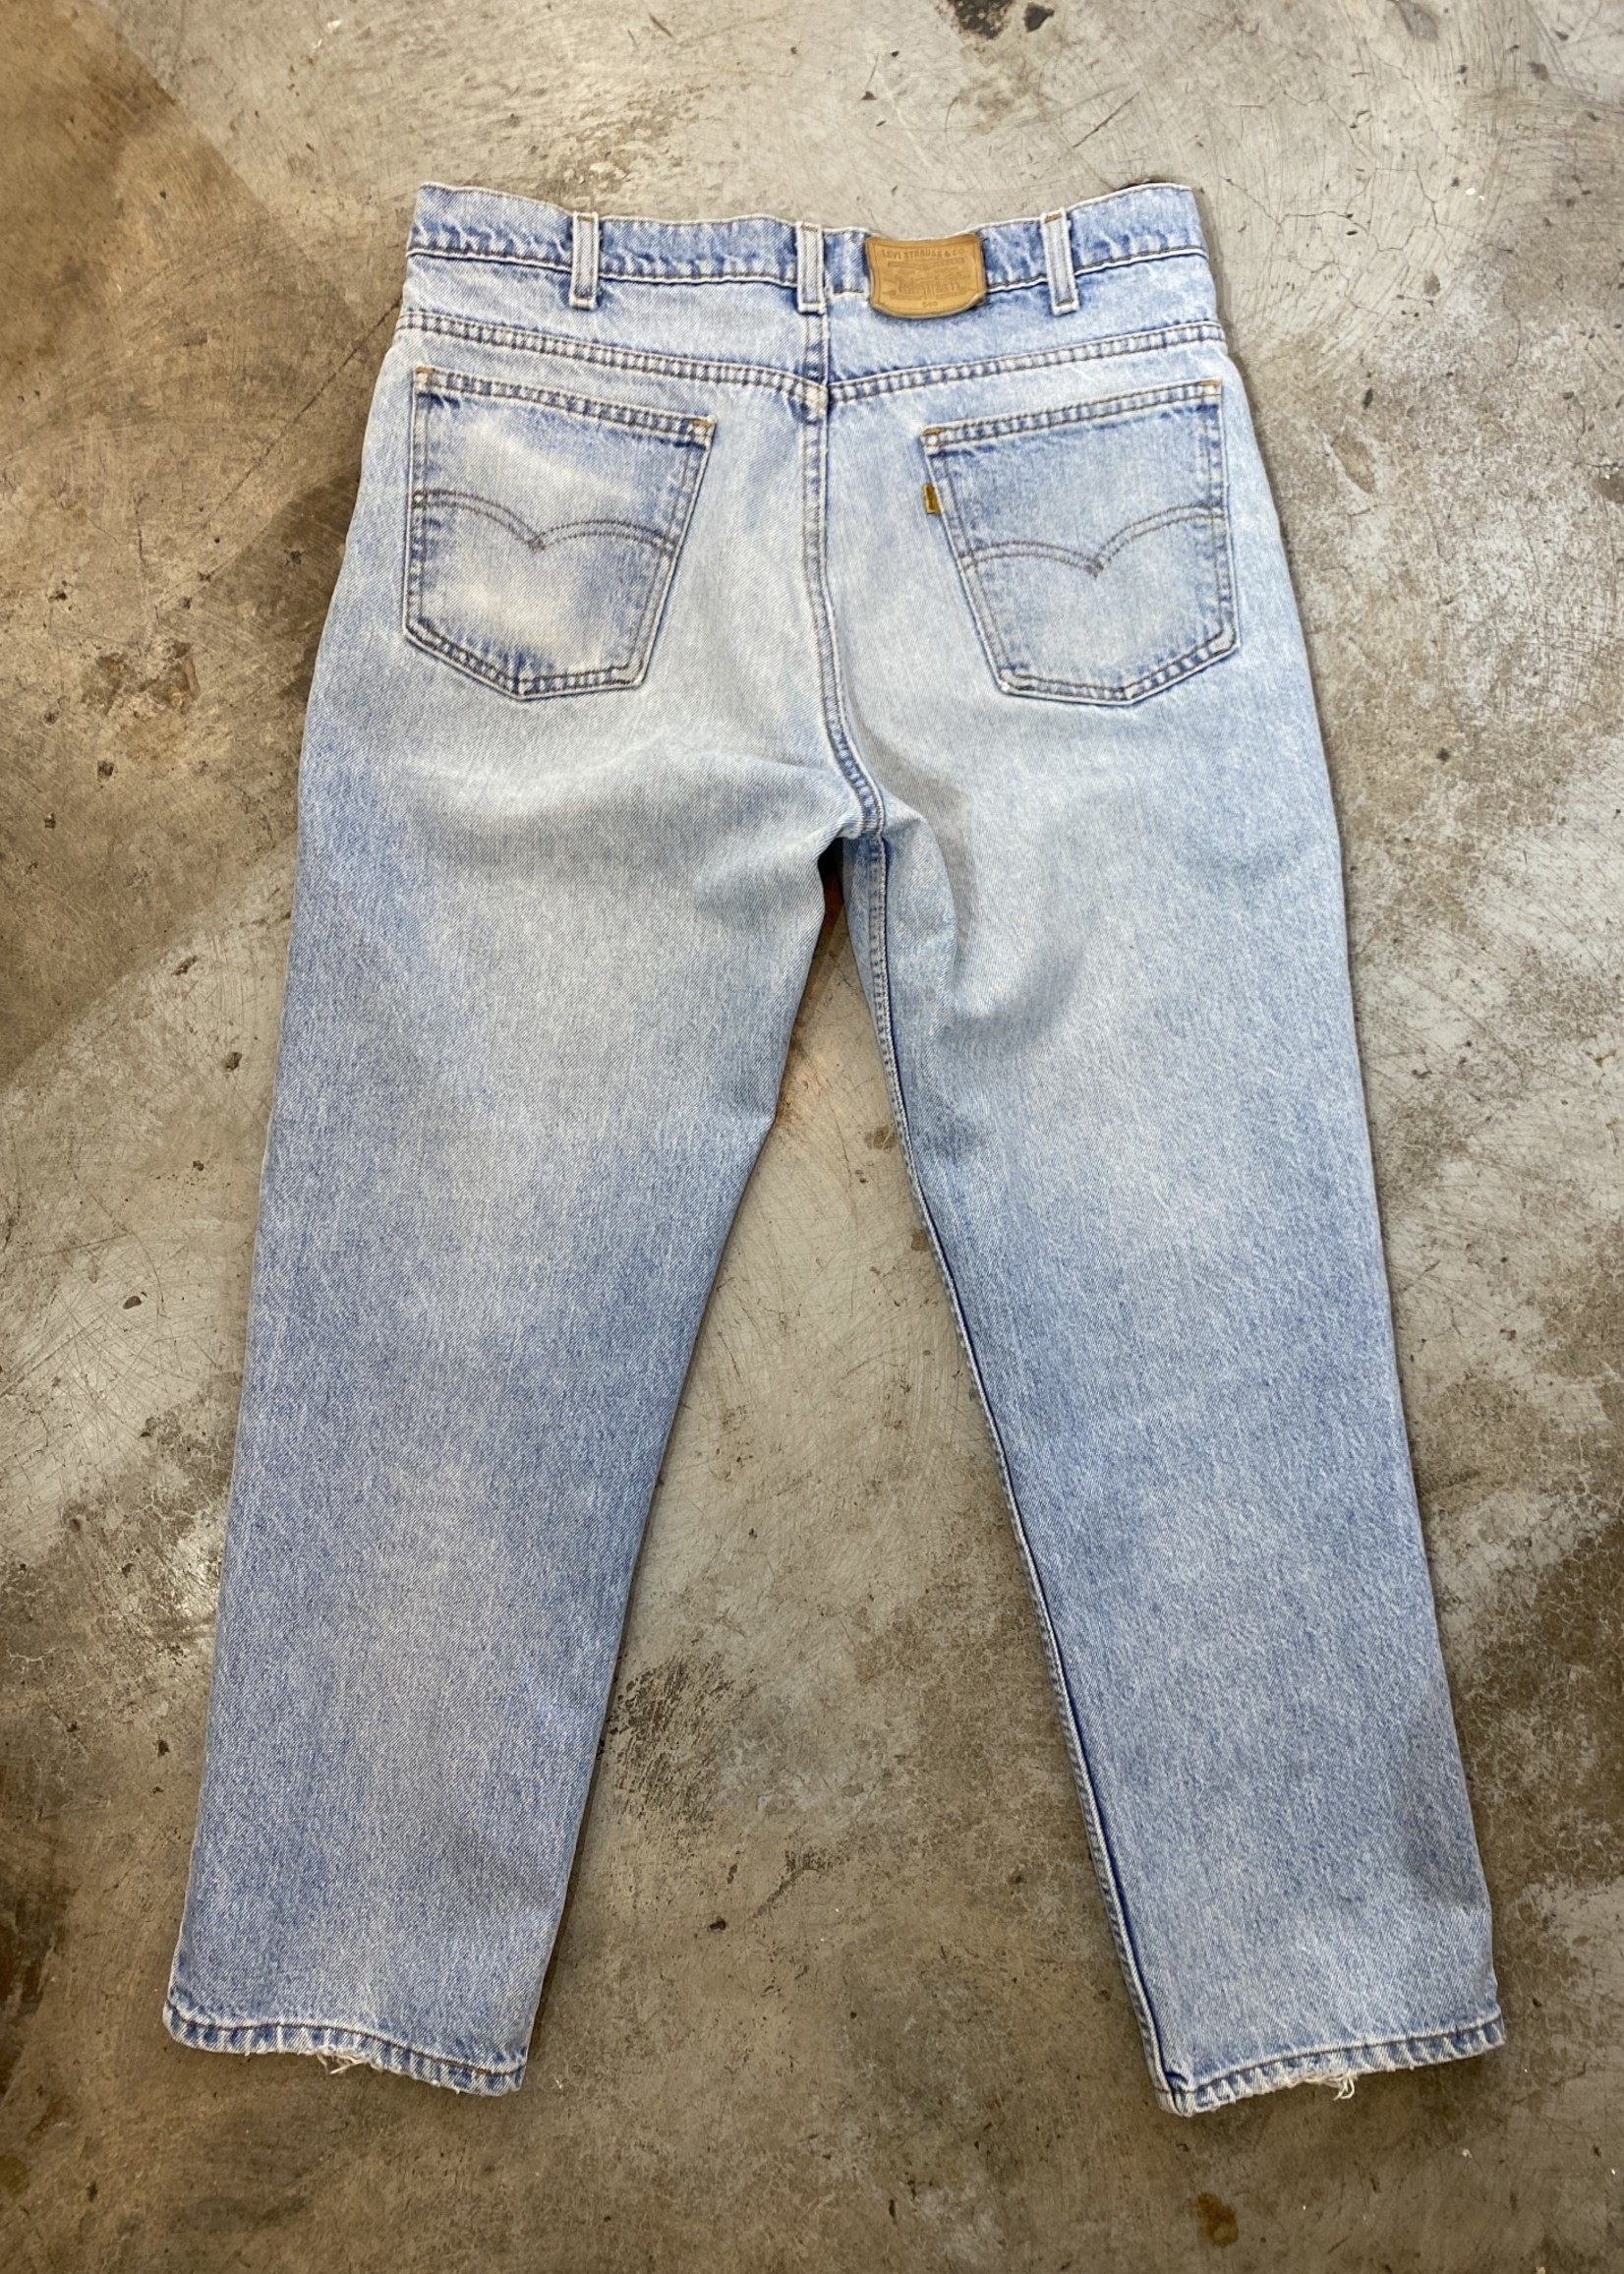 Levi 540 '80s Straight Fit Light Wash Distressed Jeans 34" x 28"